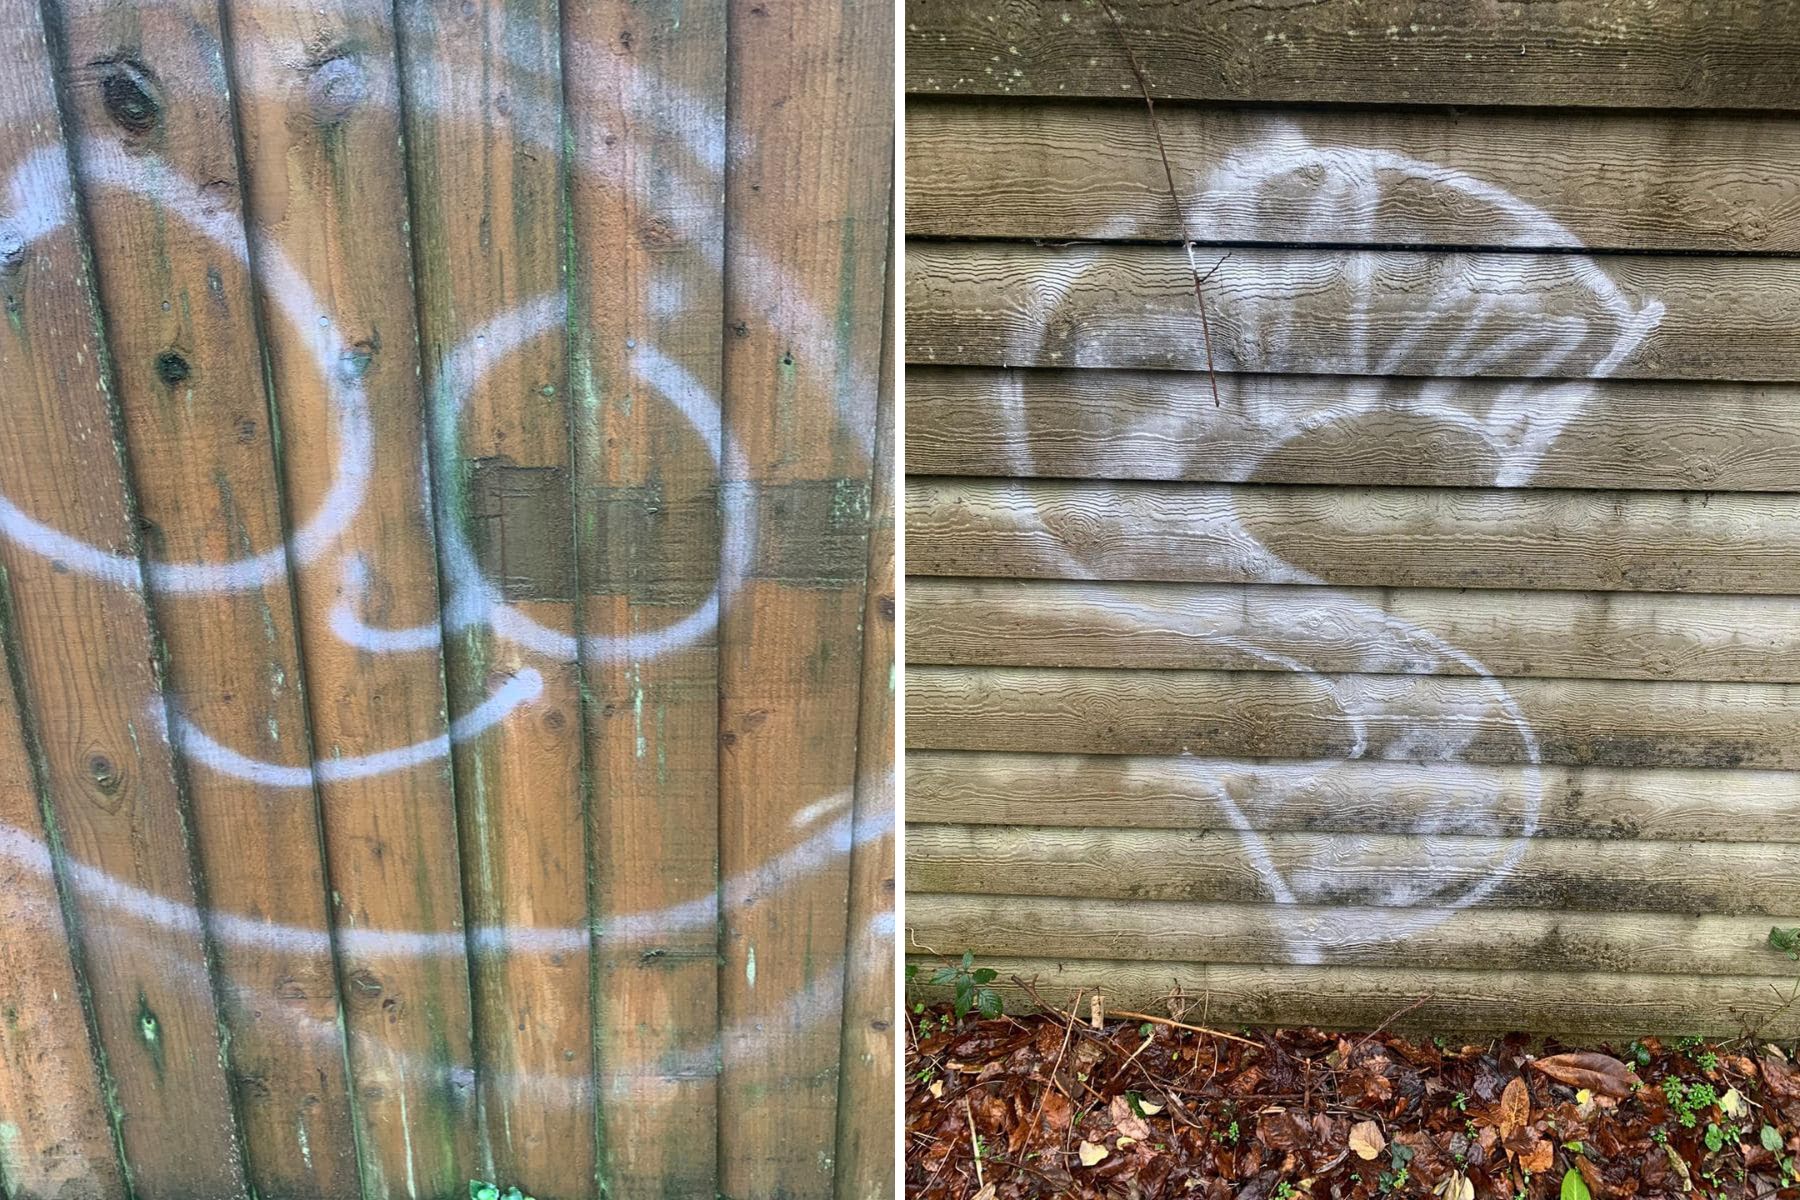 Dorset Police are probing the graffiti in Corfe Mullen. Pictures: Facebook